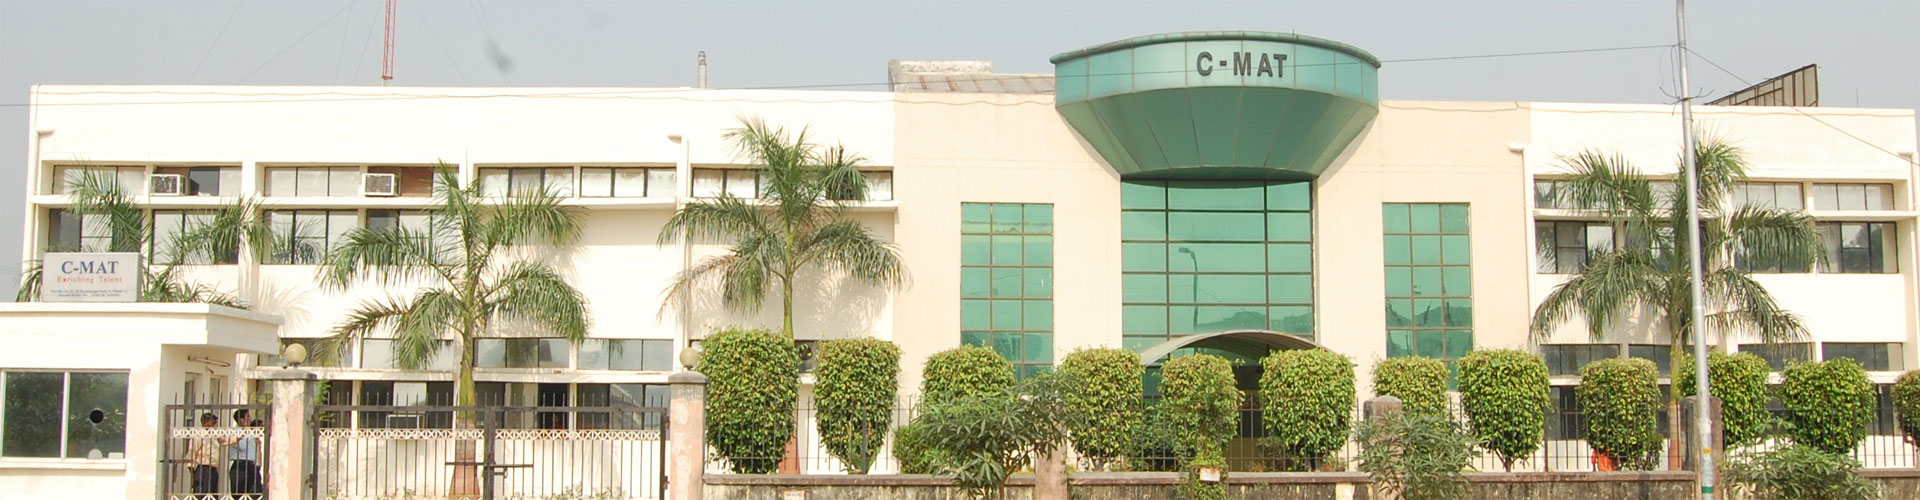 Centre for Management Technology